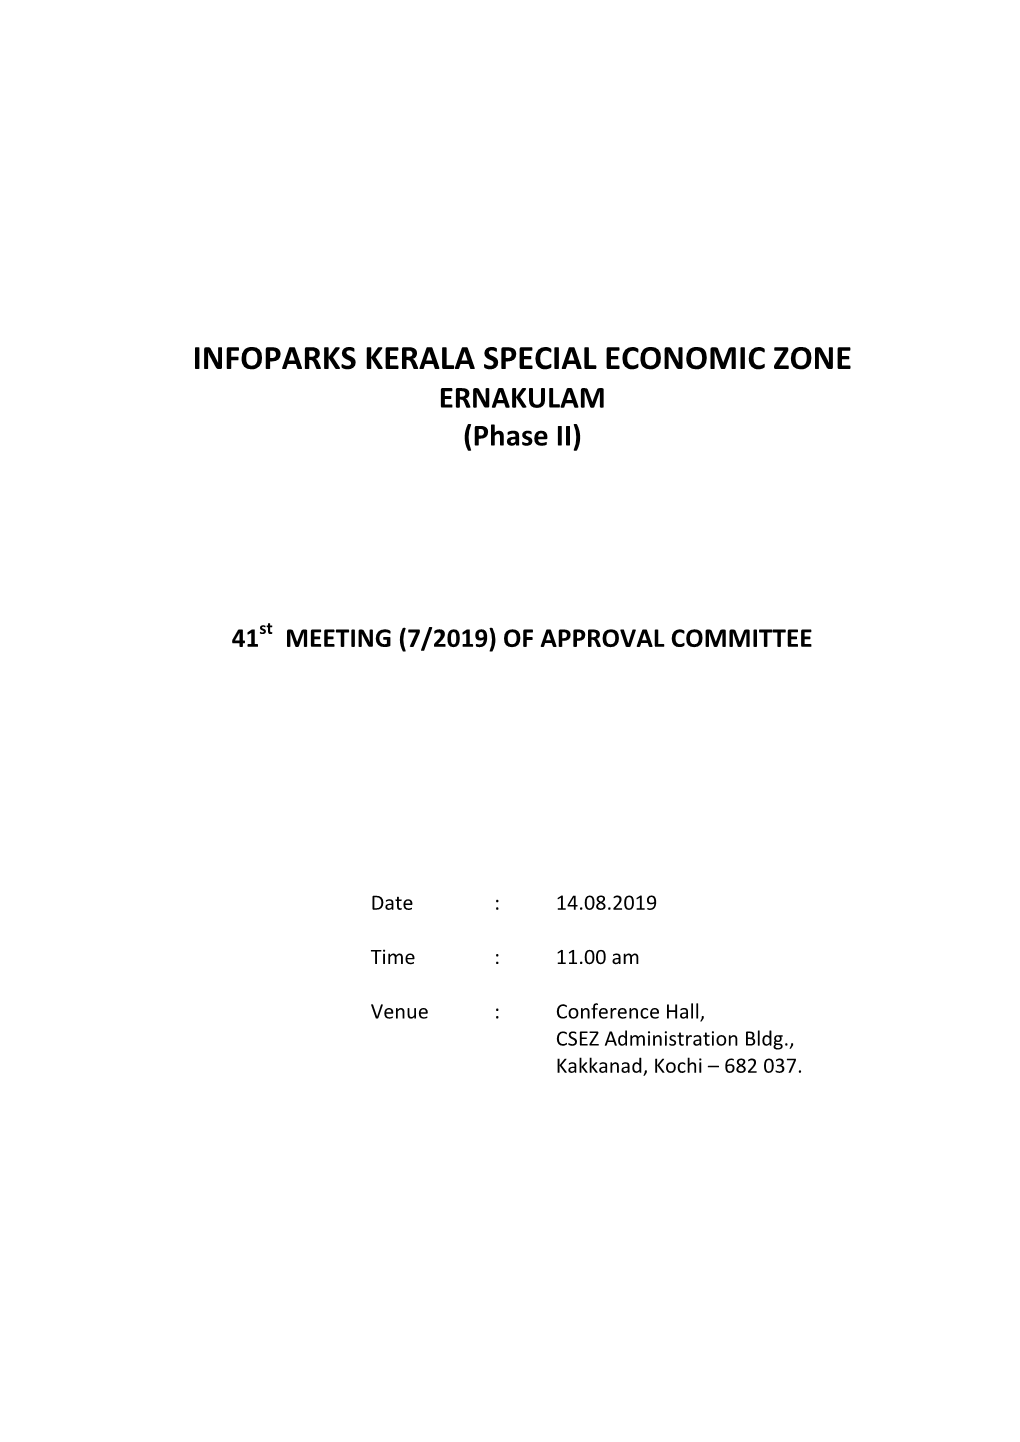 INFOPARKS KERALA SPECIAL ECONOMIC ZONE ERNAKULAM (Phase II)